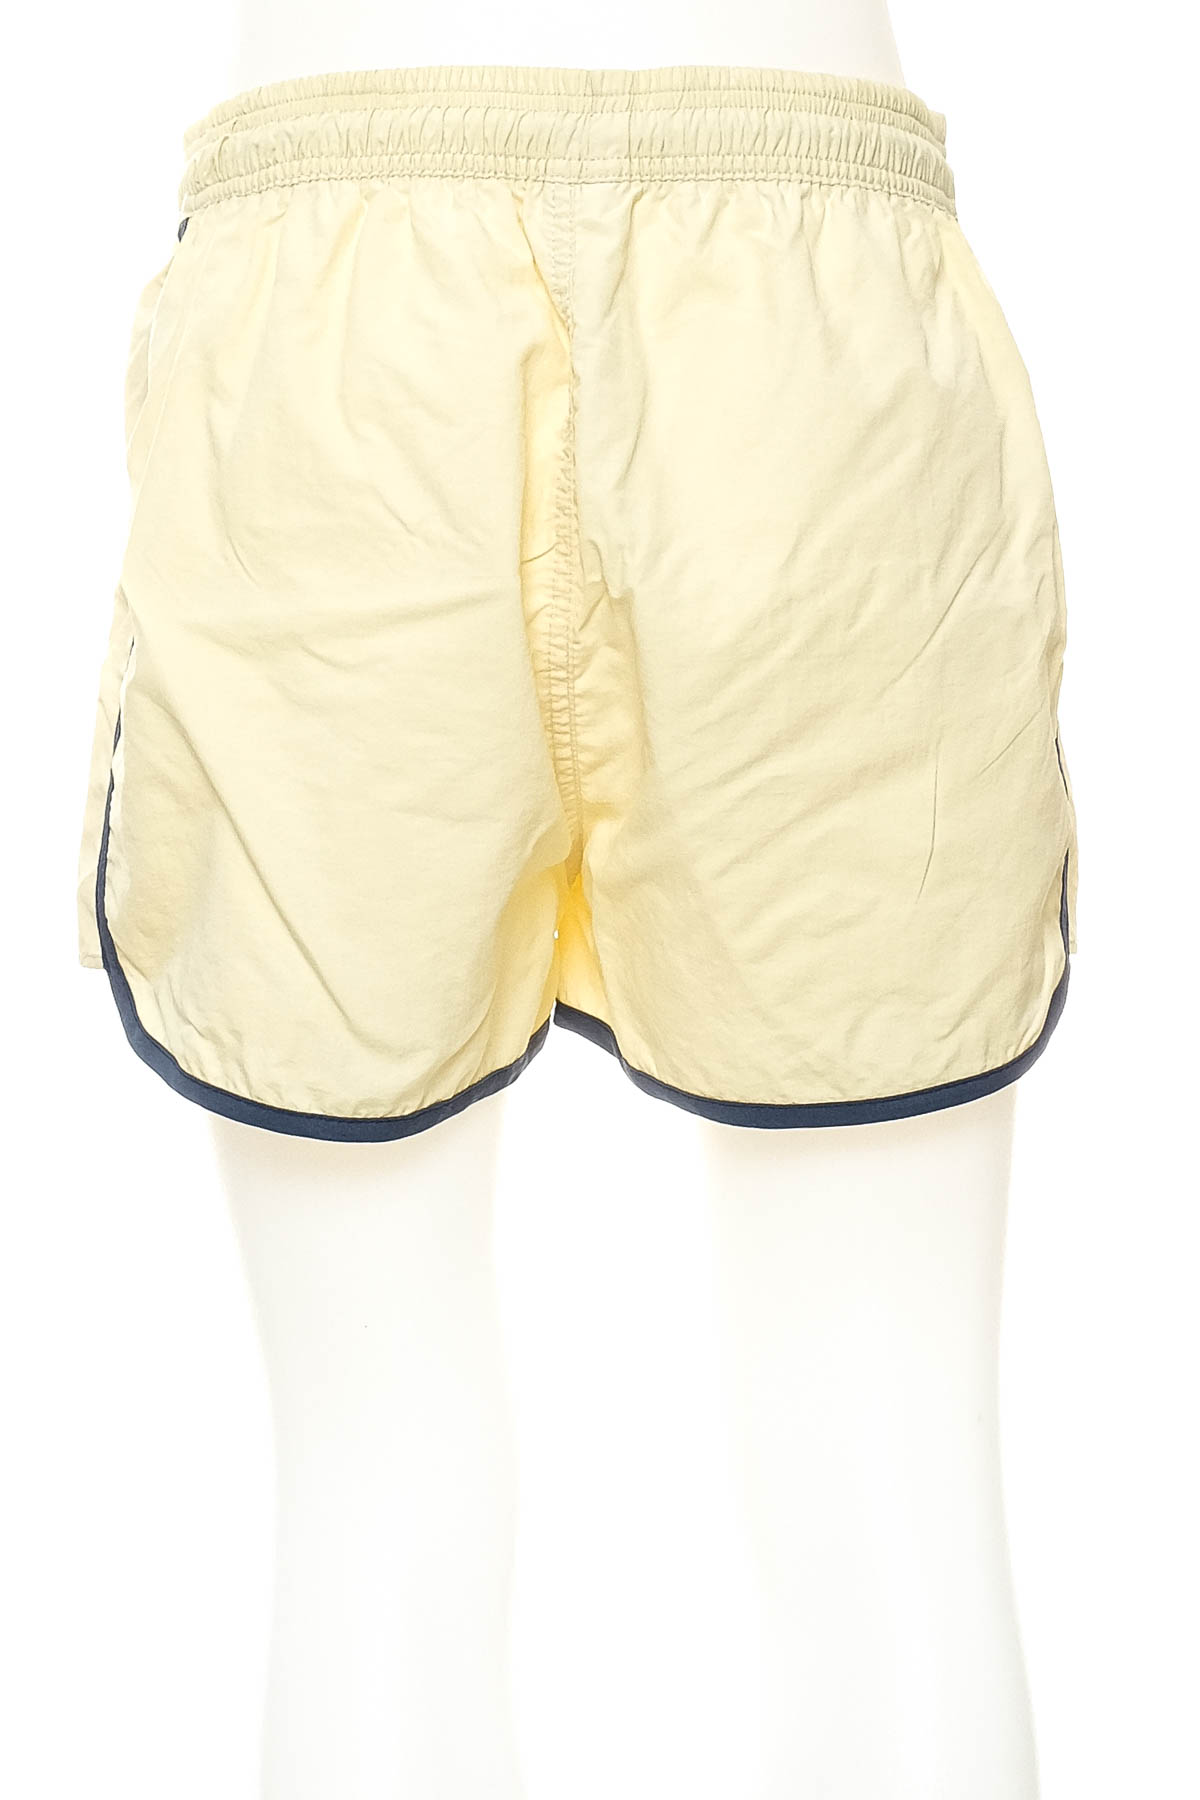 Men's shorts - Waterlemon - 1